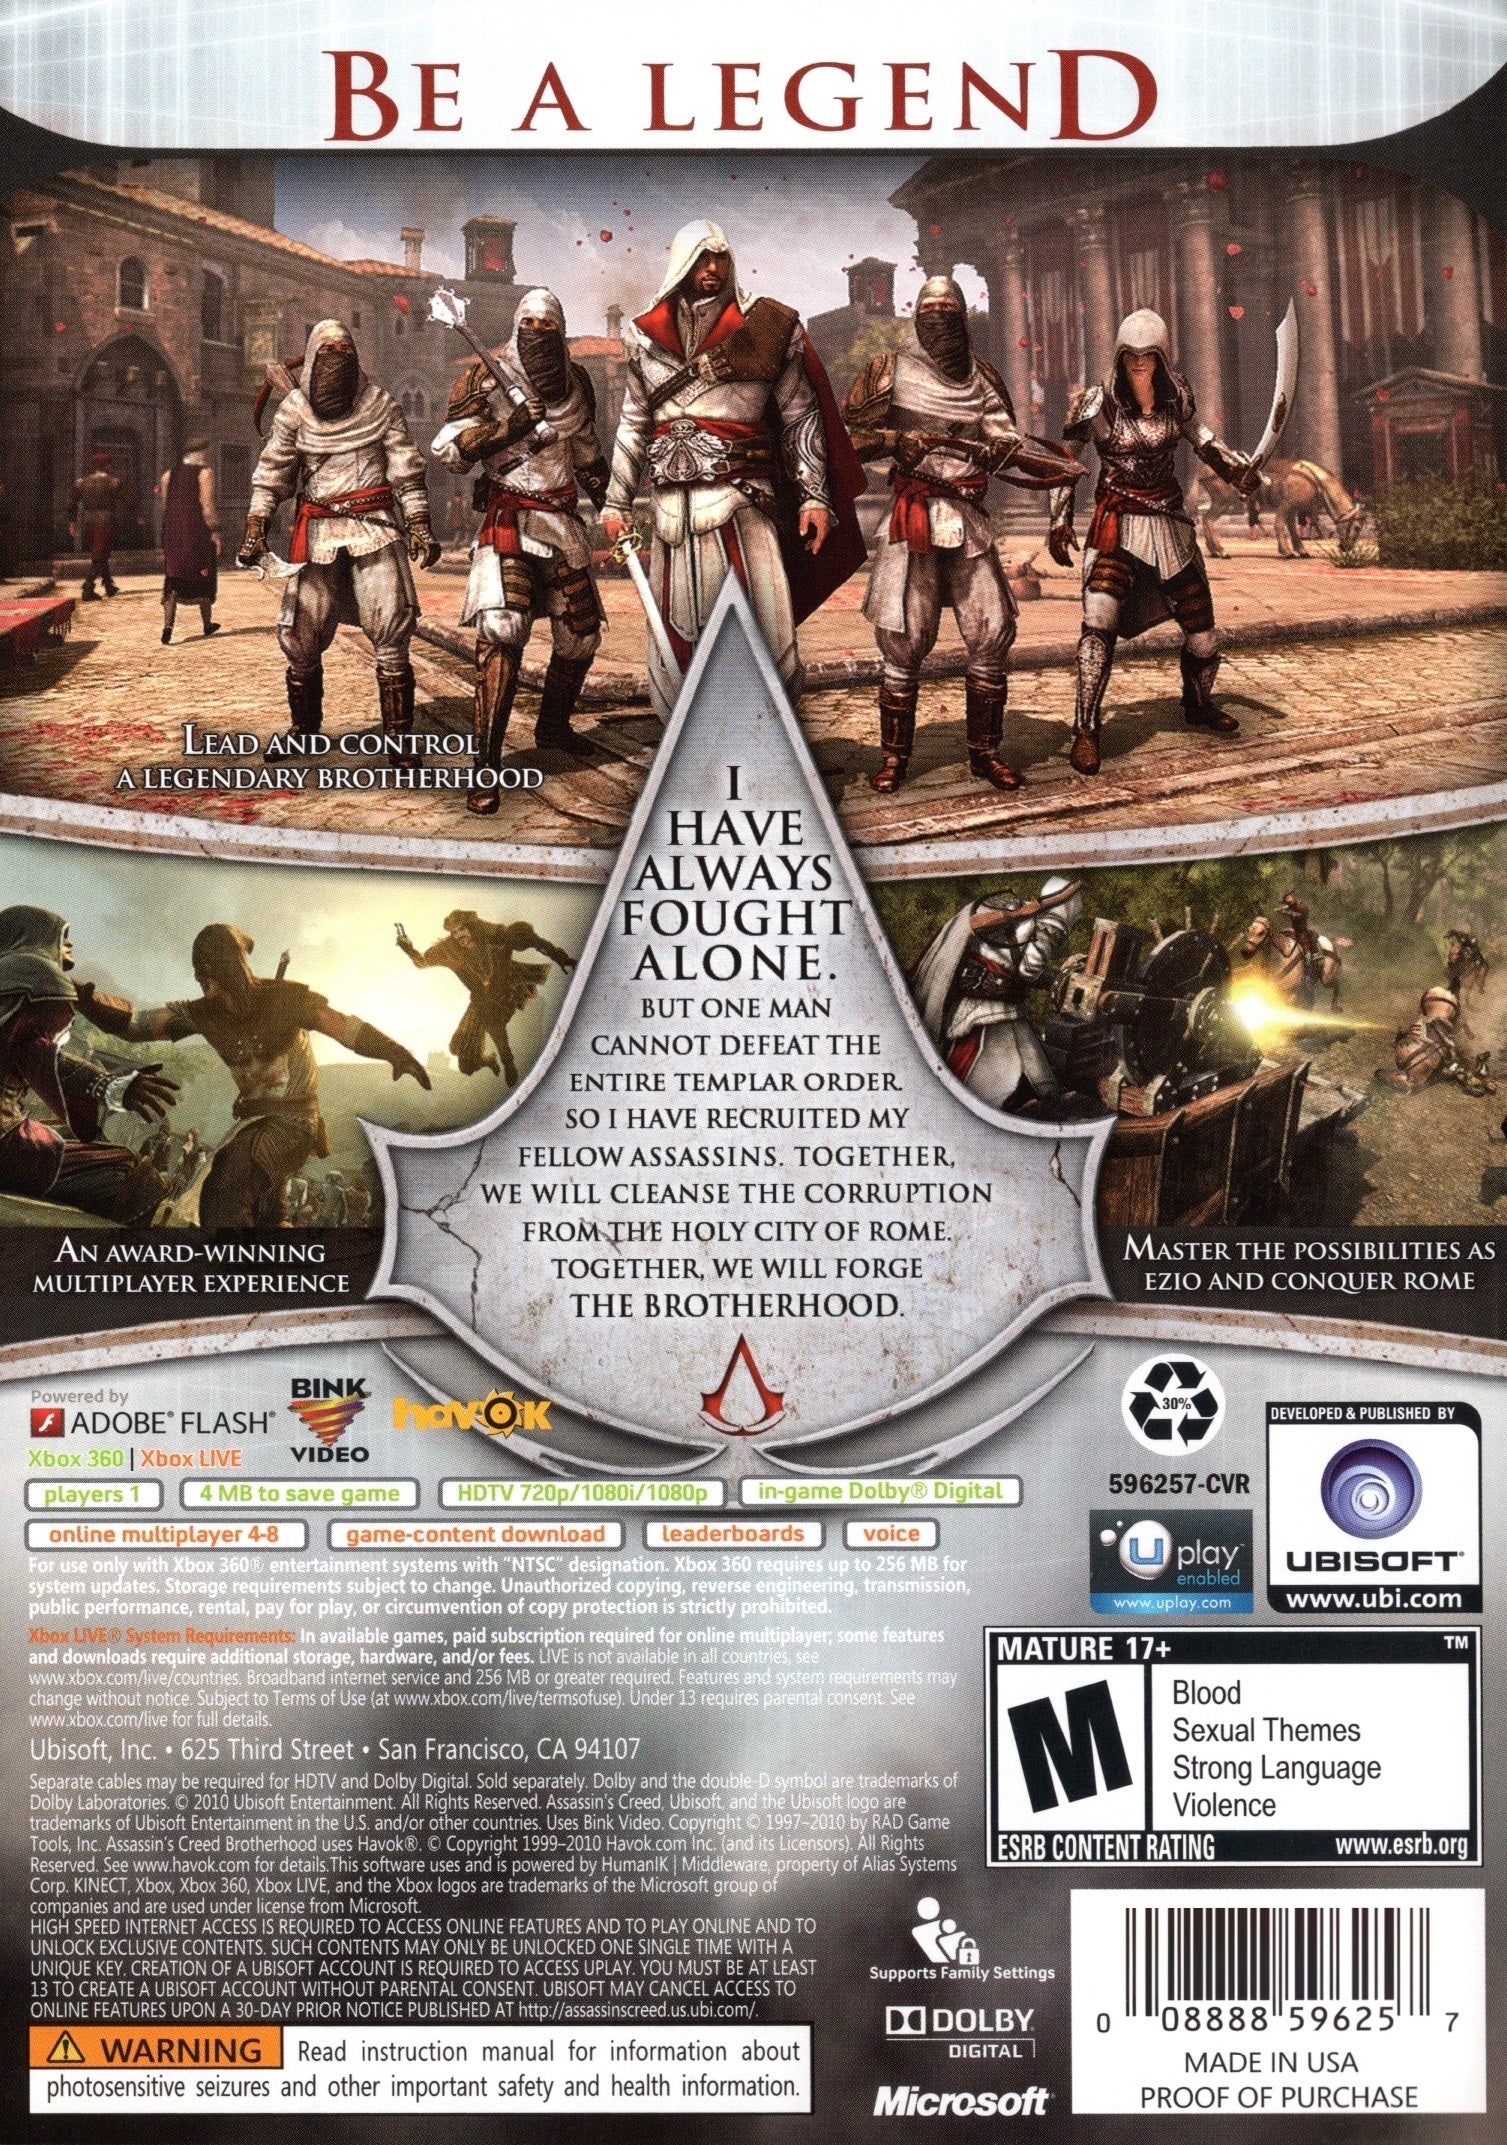 Assassin's Creed: Brotherhood - Xbox 360 Game